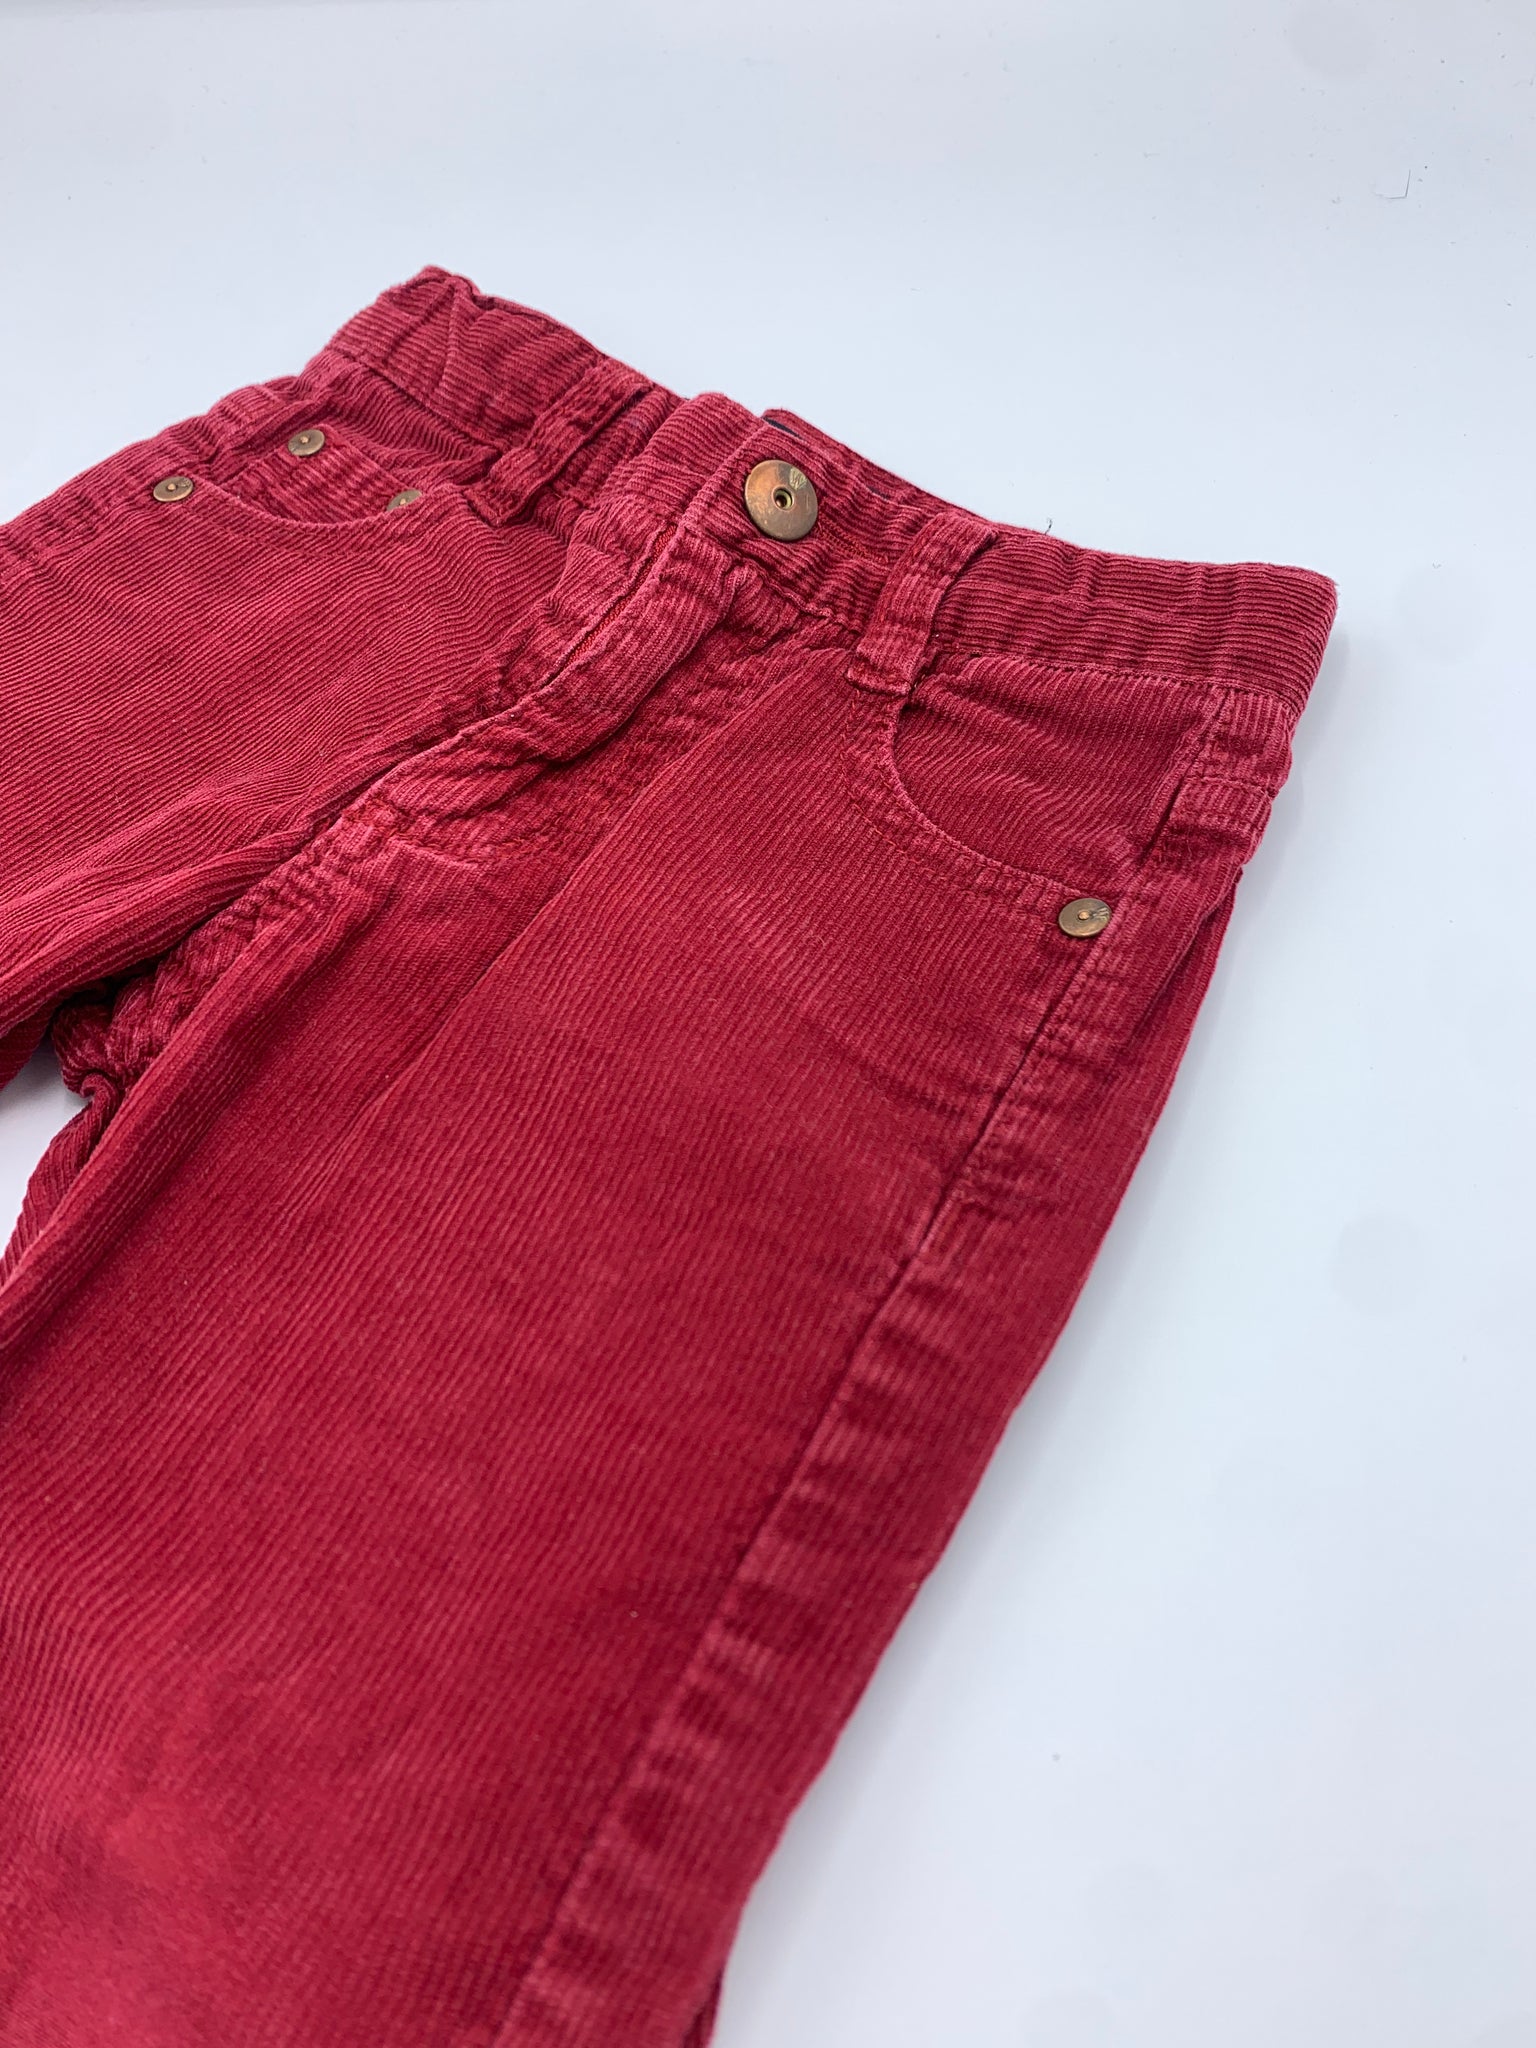 Pantalon Zara 2-3 ans 98 cm (petit défauts)